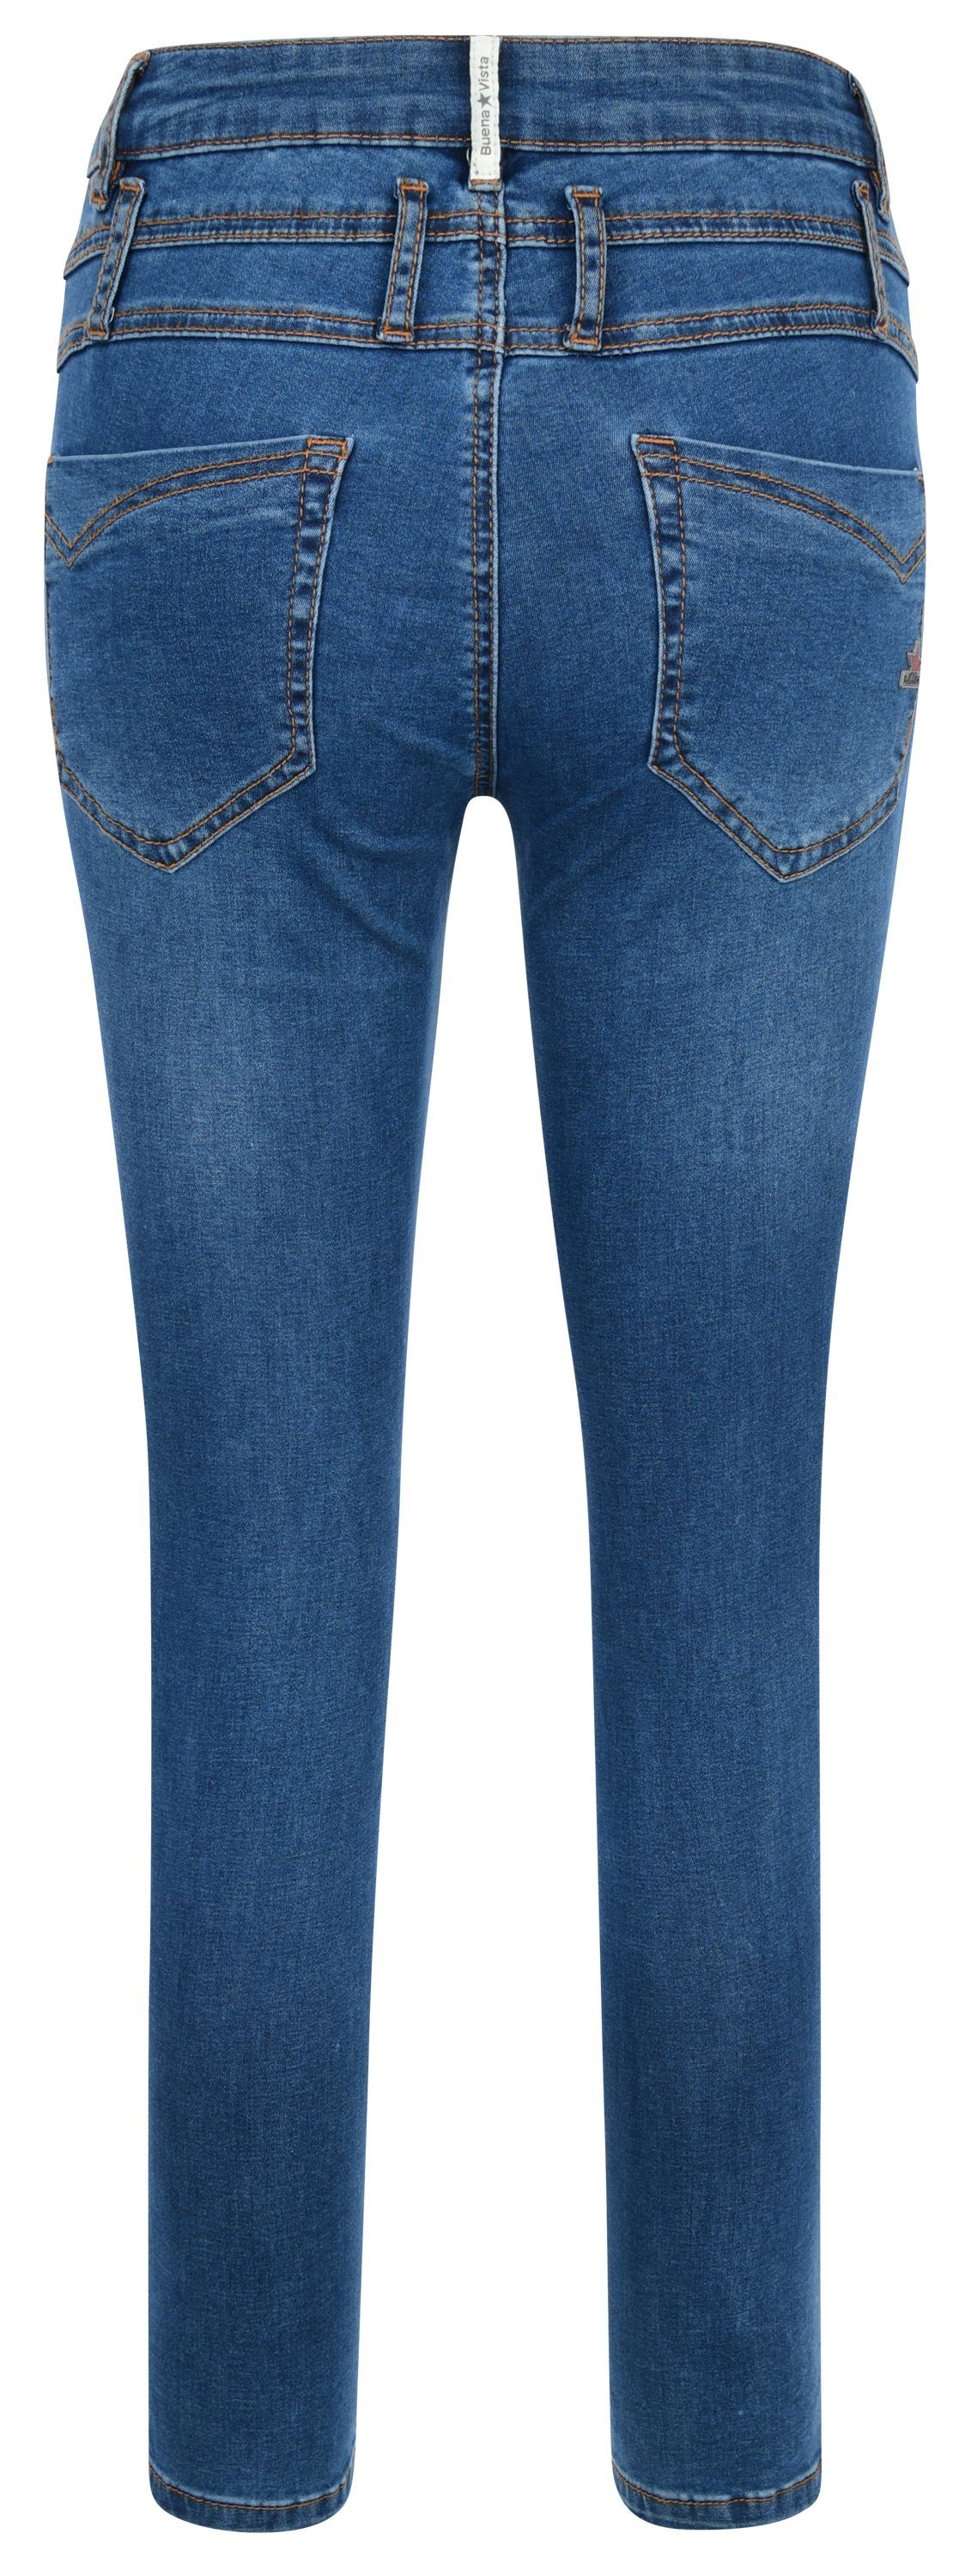 Stretch-Jeans B5744 VISTA BUENA 7/8 888 Denim - FLORIDA blue middle 102.4452 Cozy Buena Vista